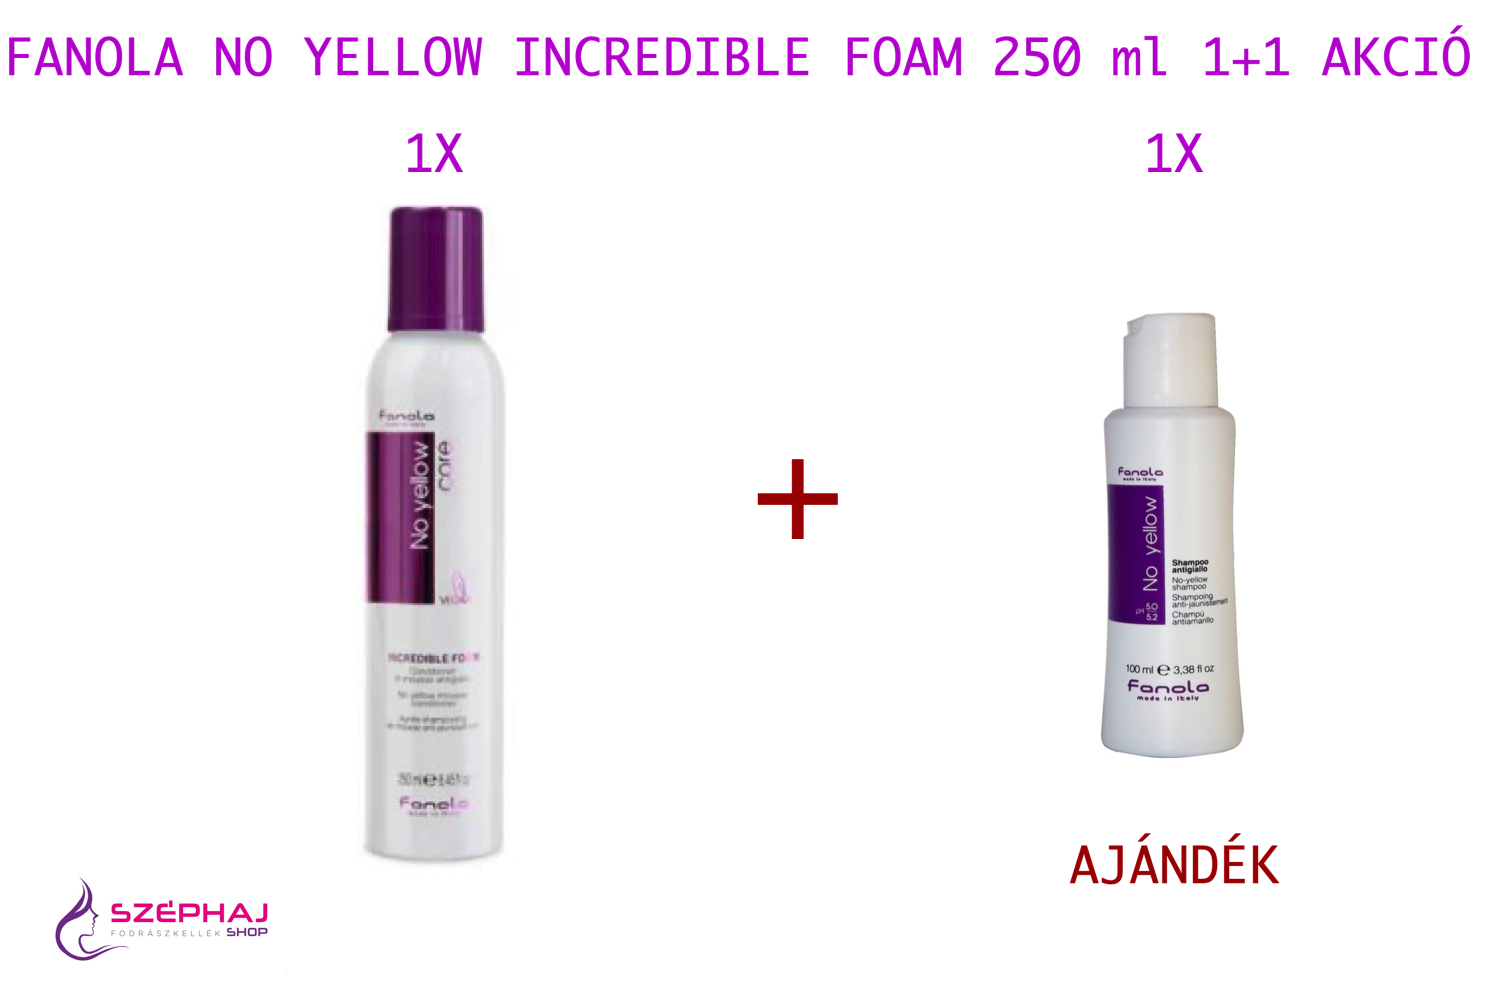 FANOLA No Yellow Incredible Foam 250 ml 1+1 AKCIÓ